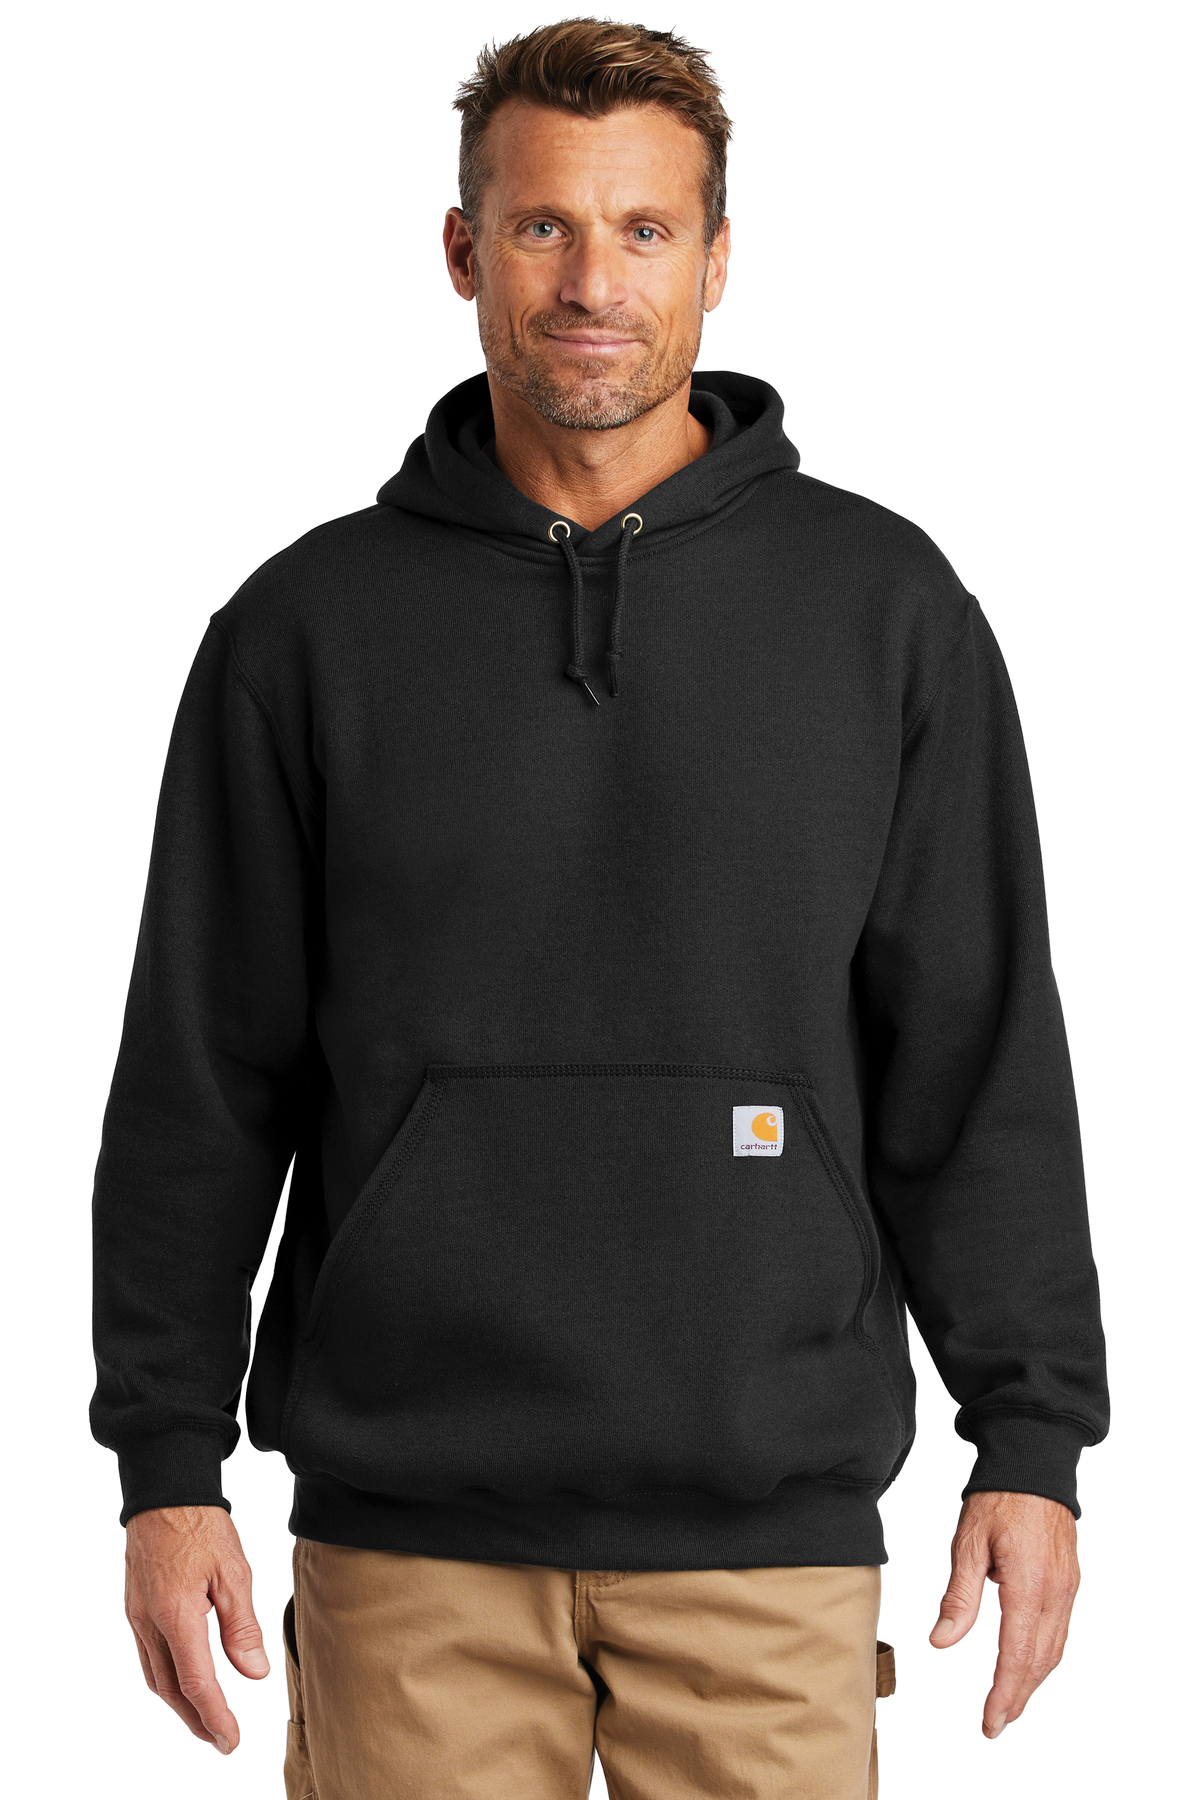 Carhartt Embroidered Men's Midweight Hooded Sweatshirt | Sweatshirts ...